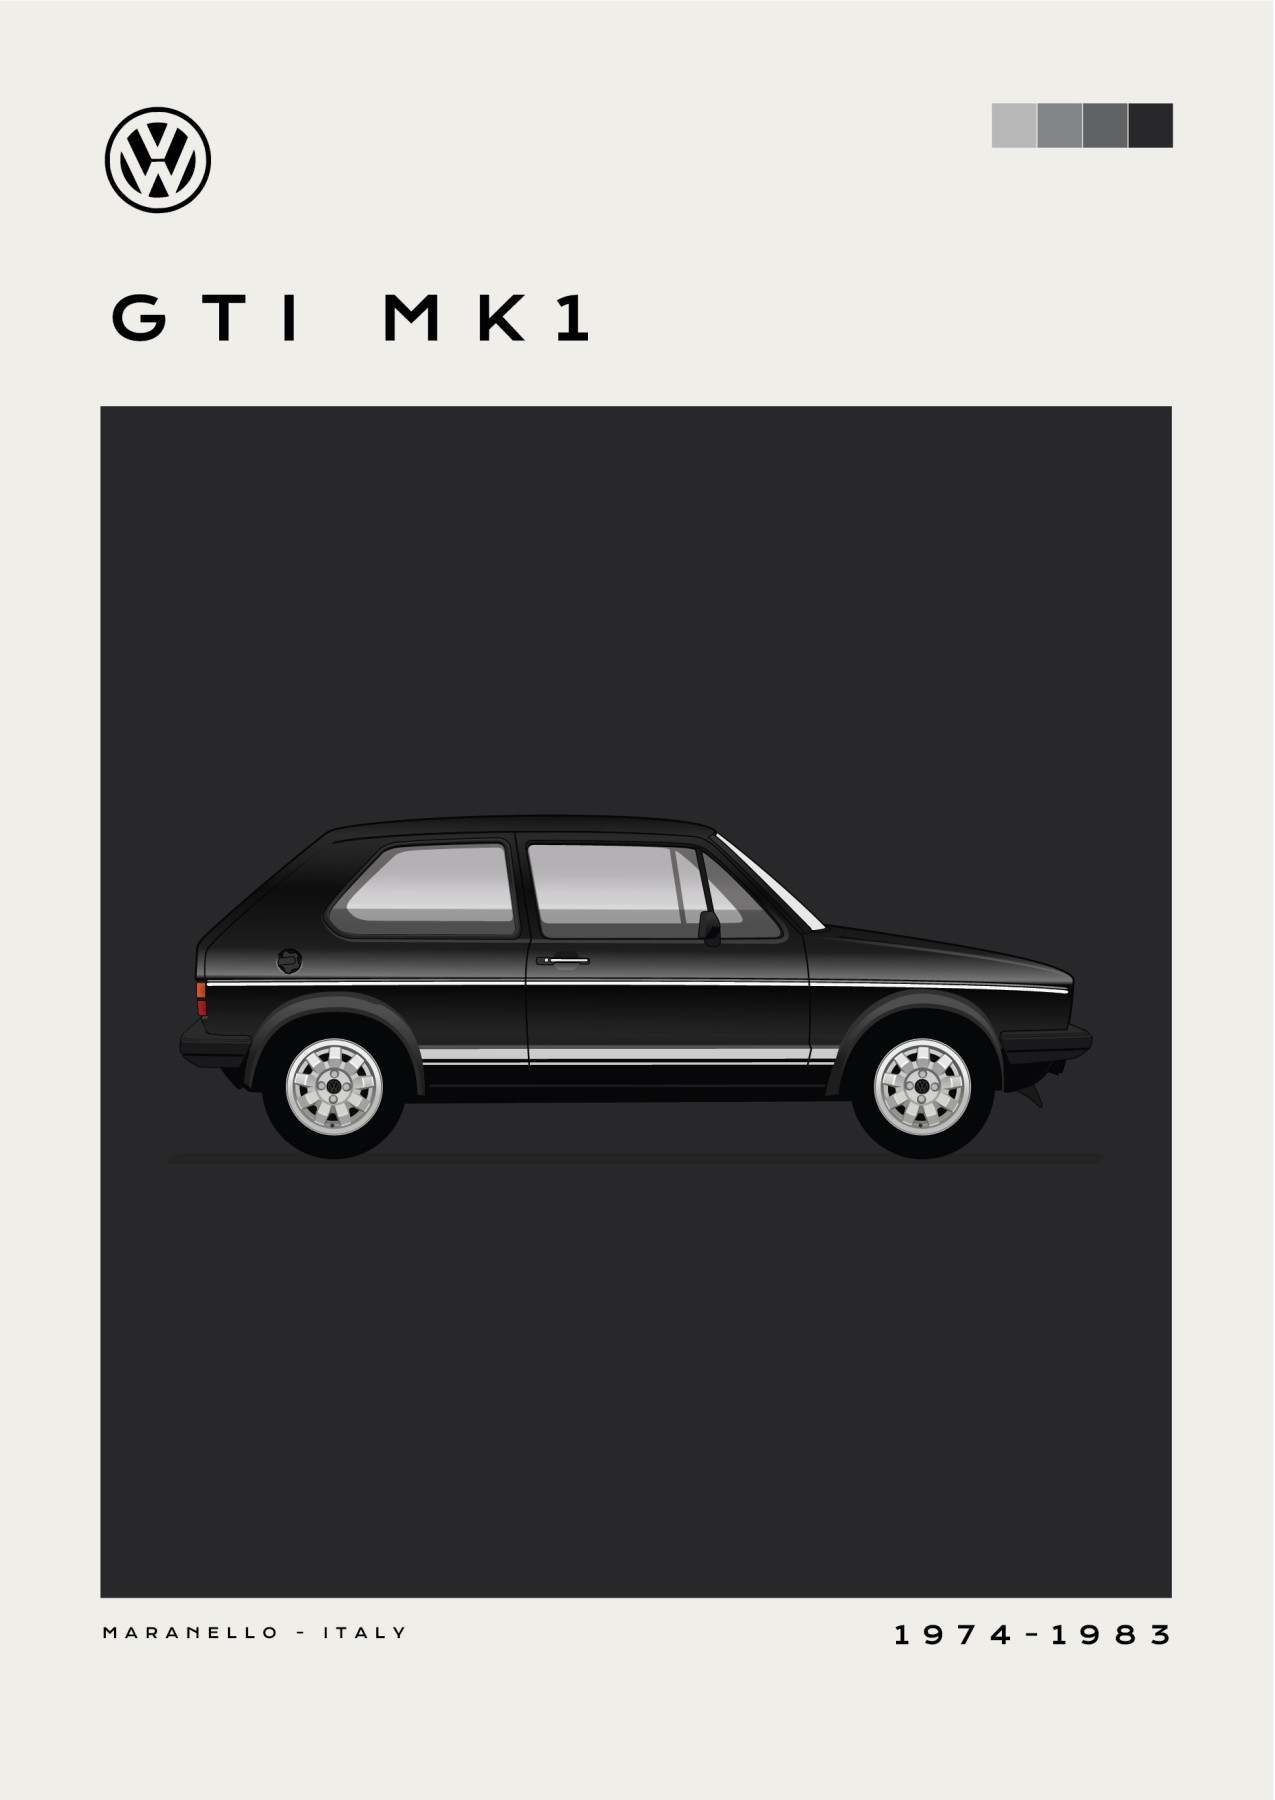 Volkswagen - GTI MK1 - Black